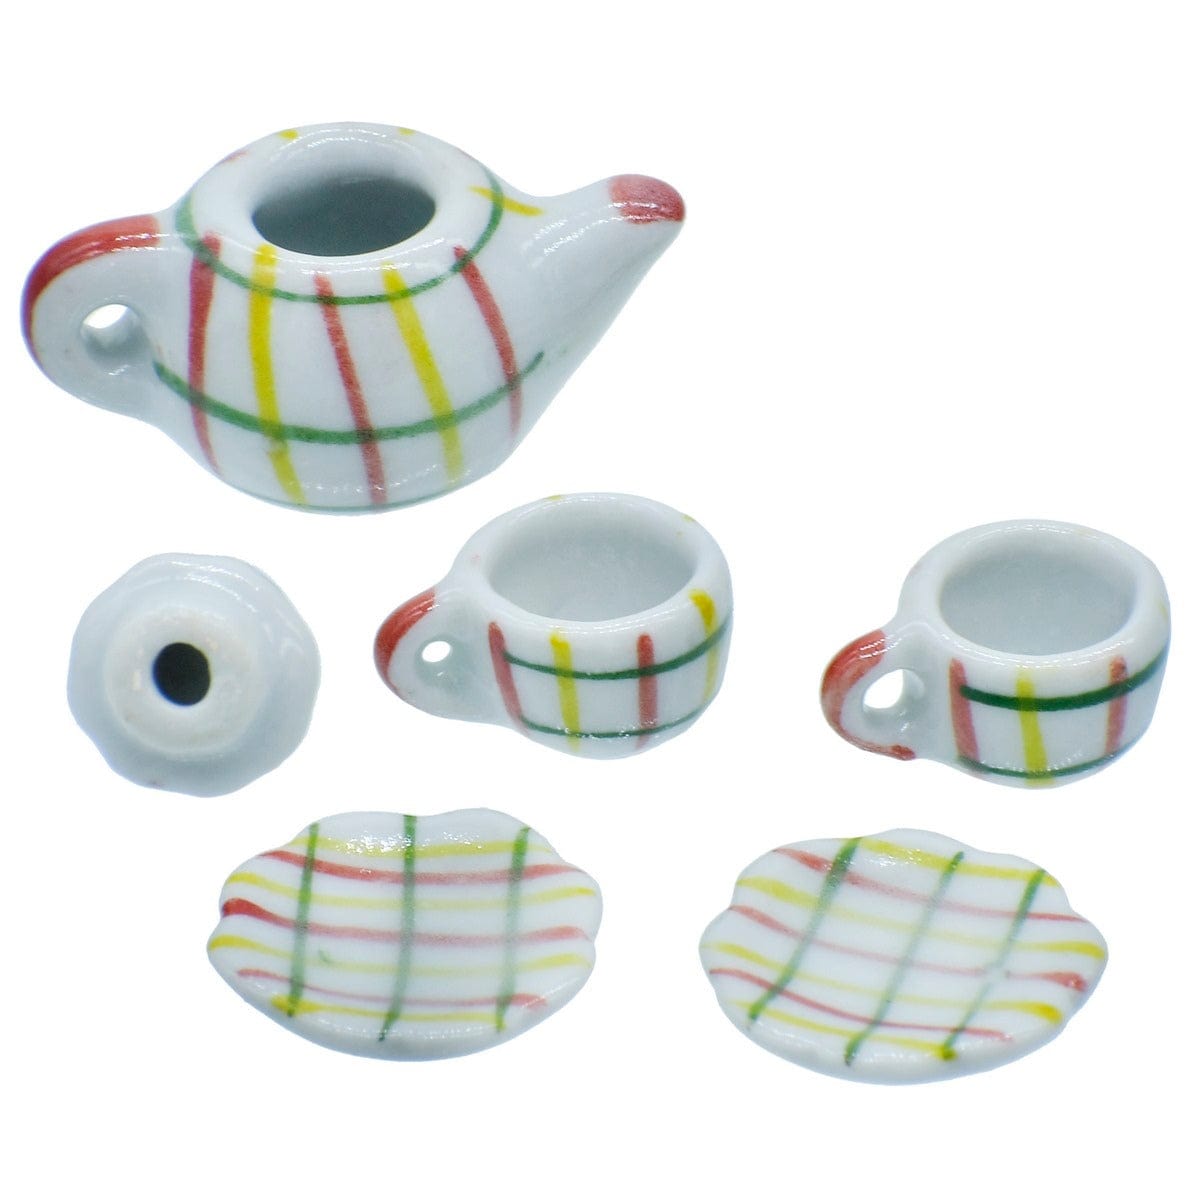 jags-mumbai Miniature Miniature Ceramics Tea Pot Set Color Full MCP-05